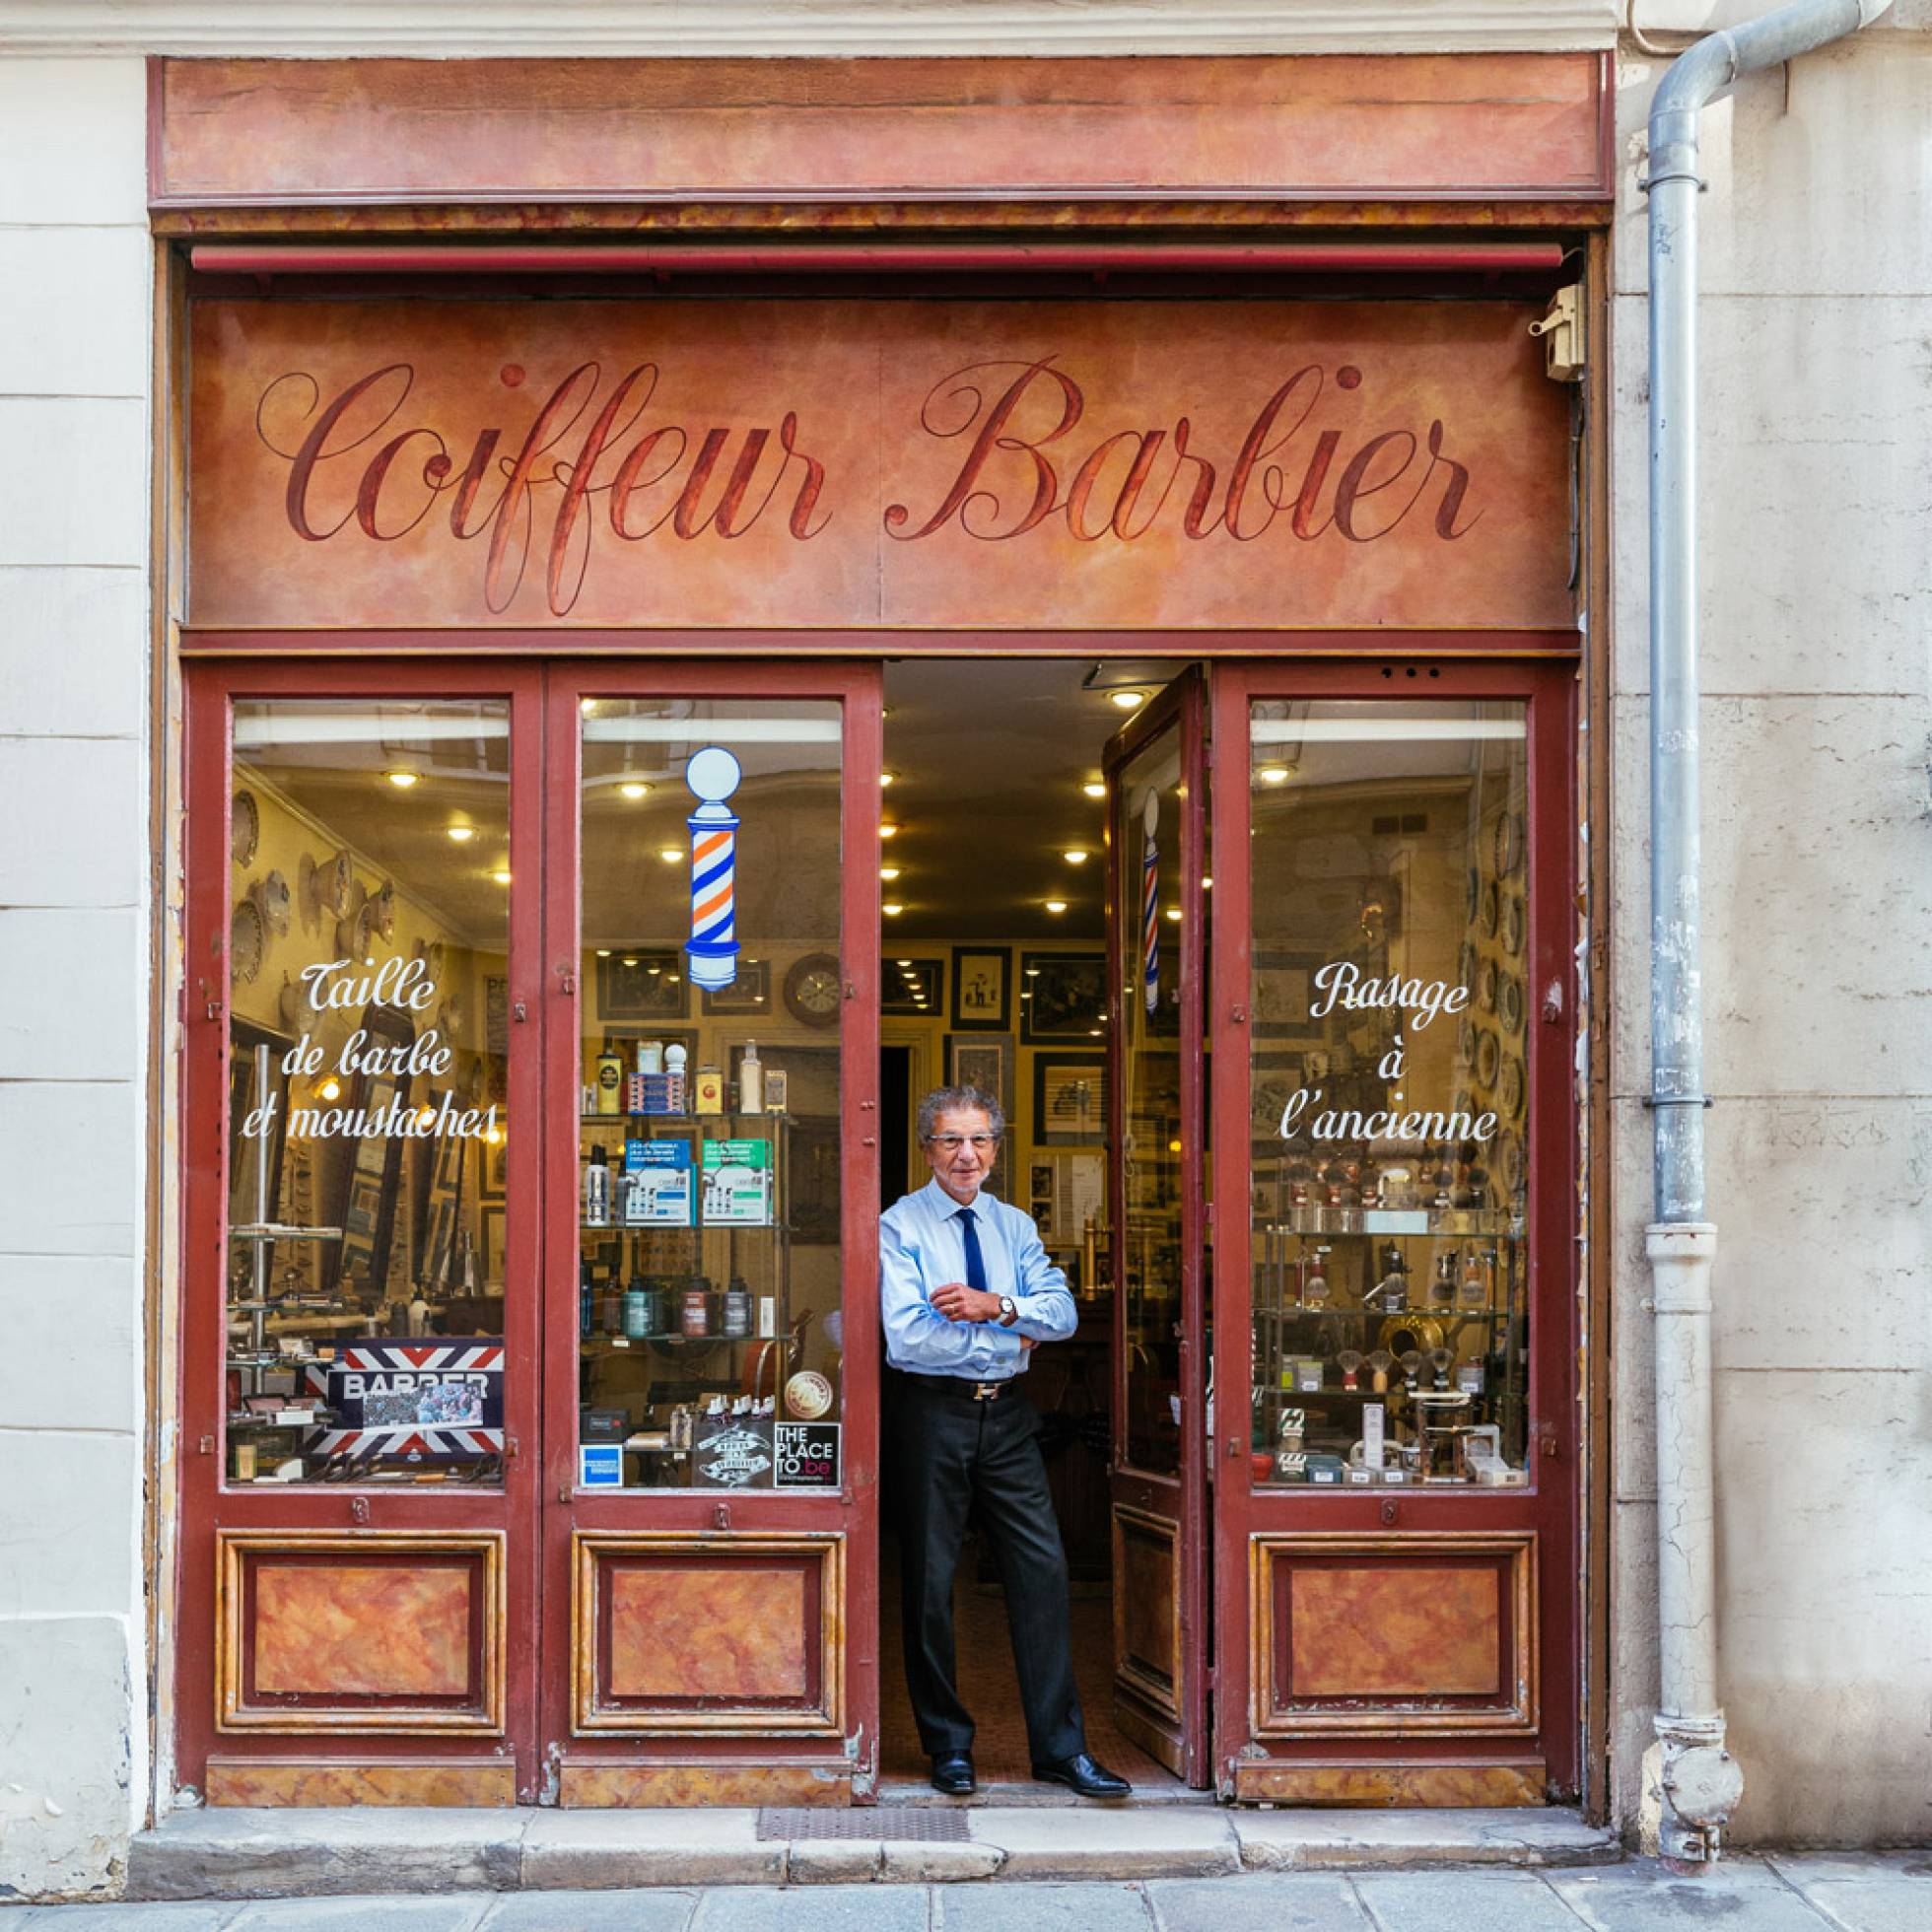 Shop sang. Витрина магазина. Витрины магазинов в Париже. Красивые витрины магазинов. Витрины парижских магазинов.